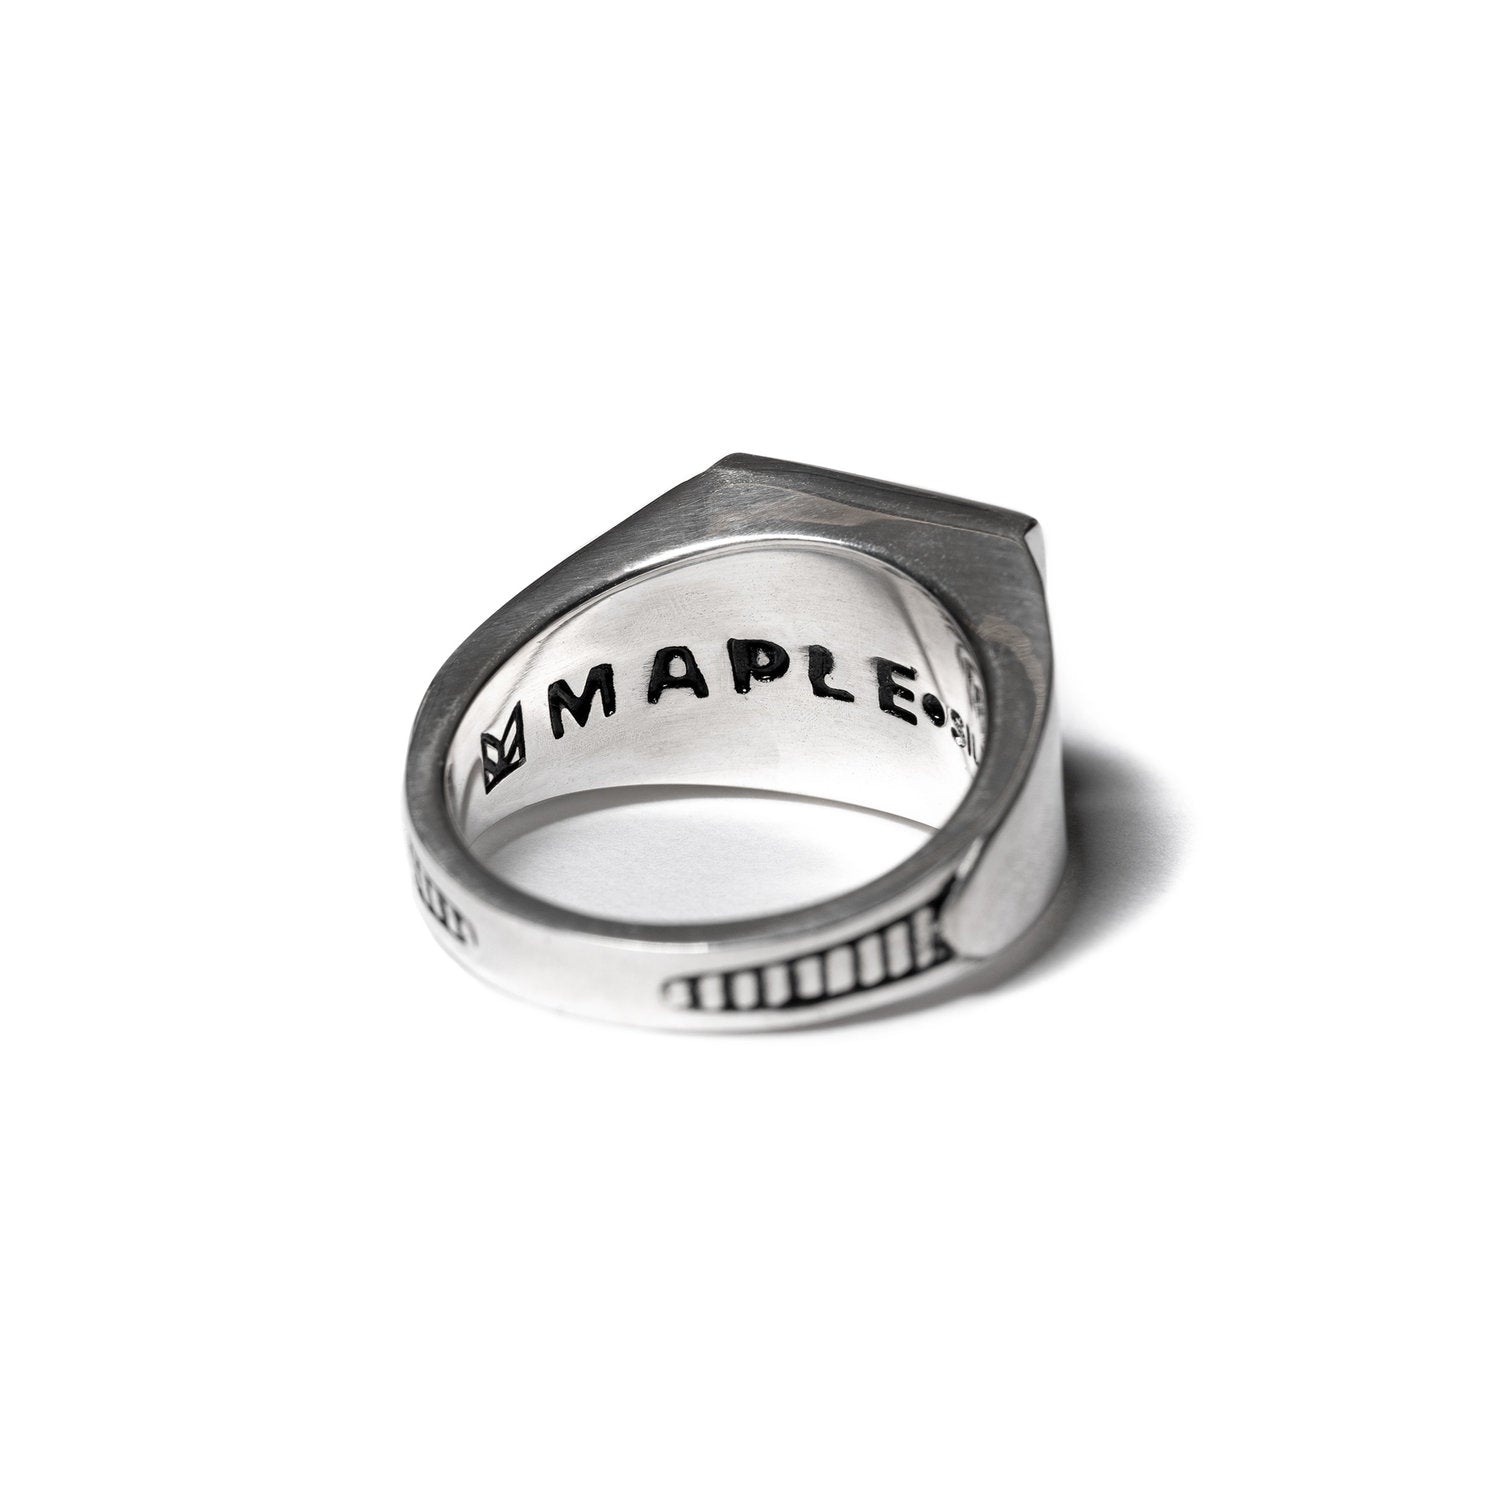 Collegiate Ring (Silver/Red Garnet) – MAPLE